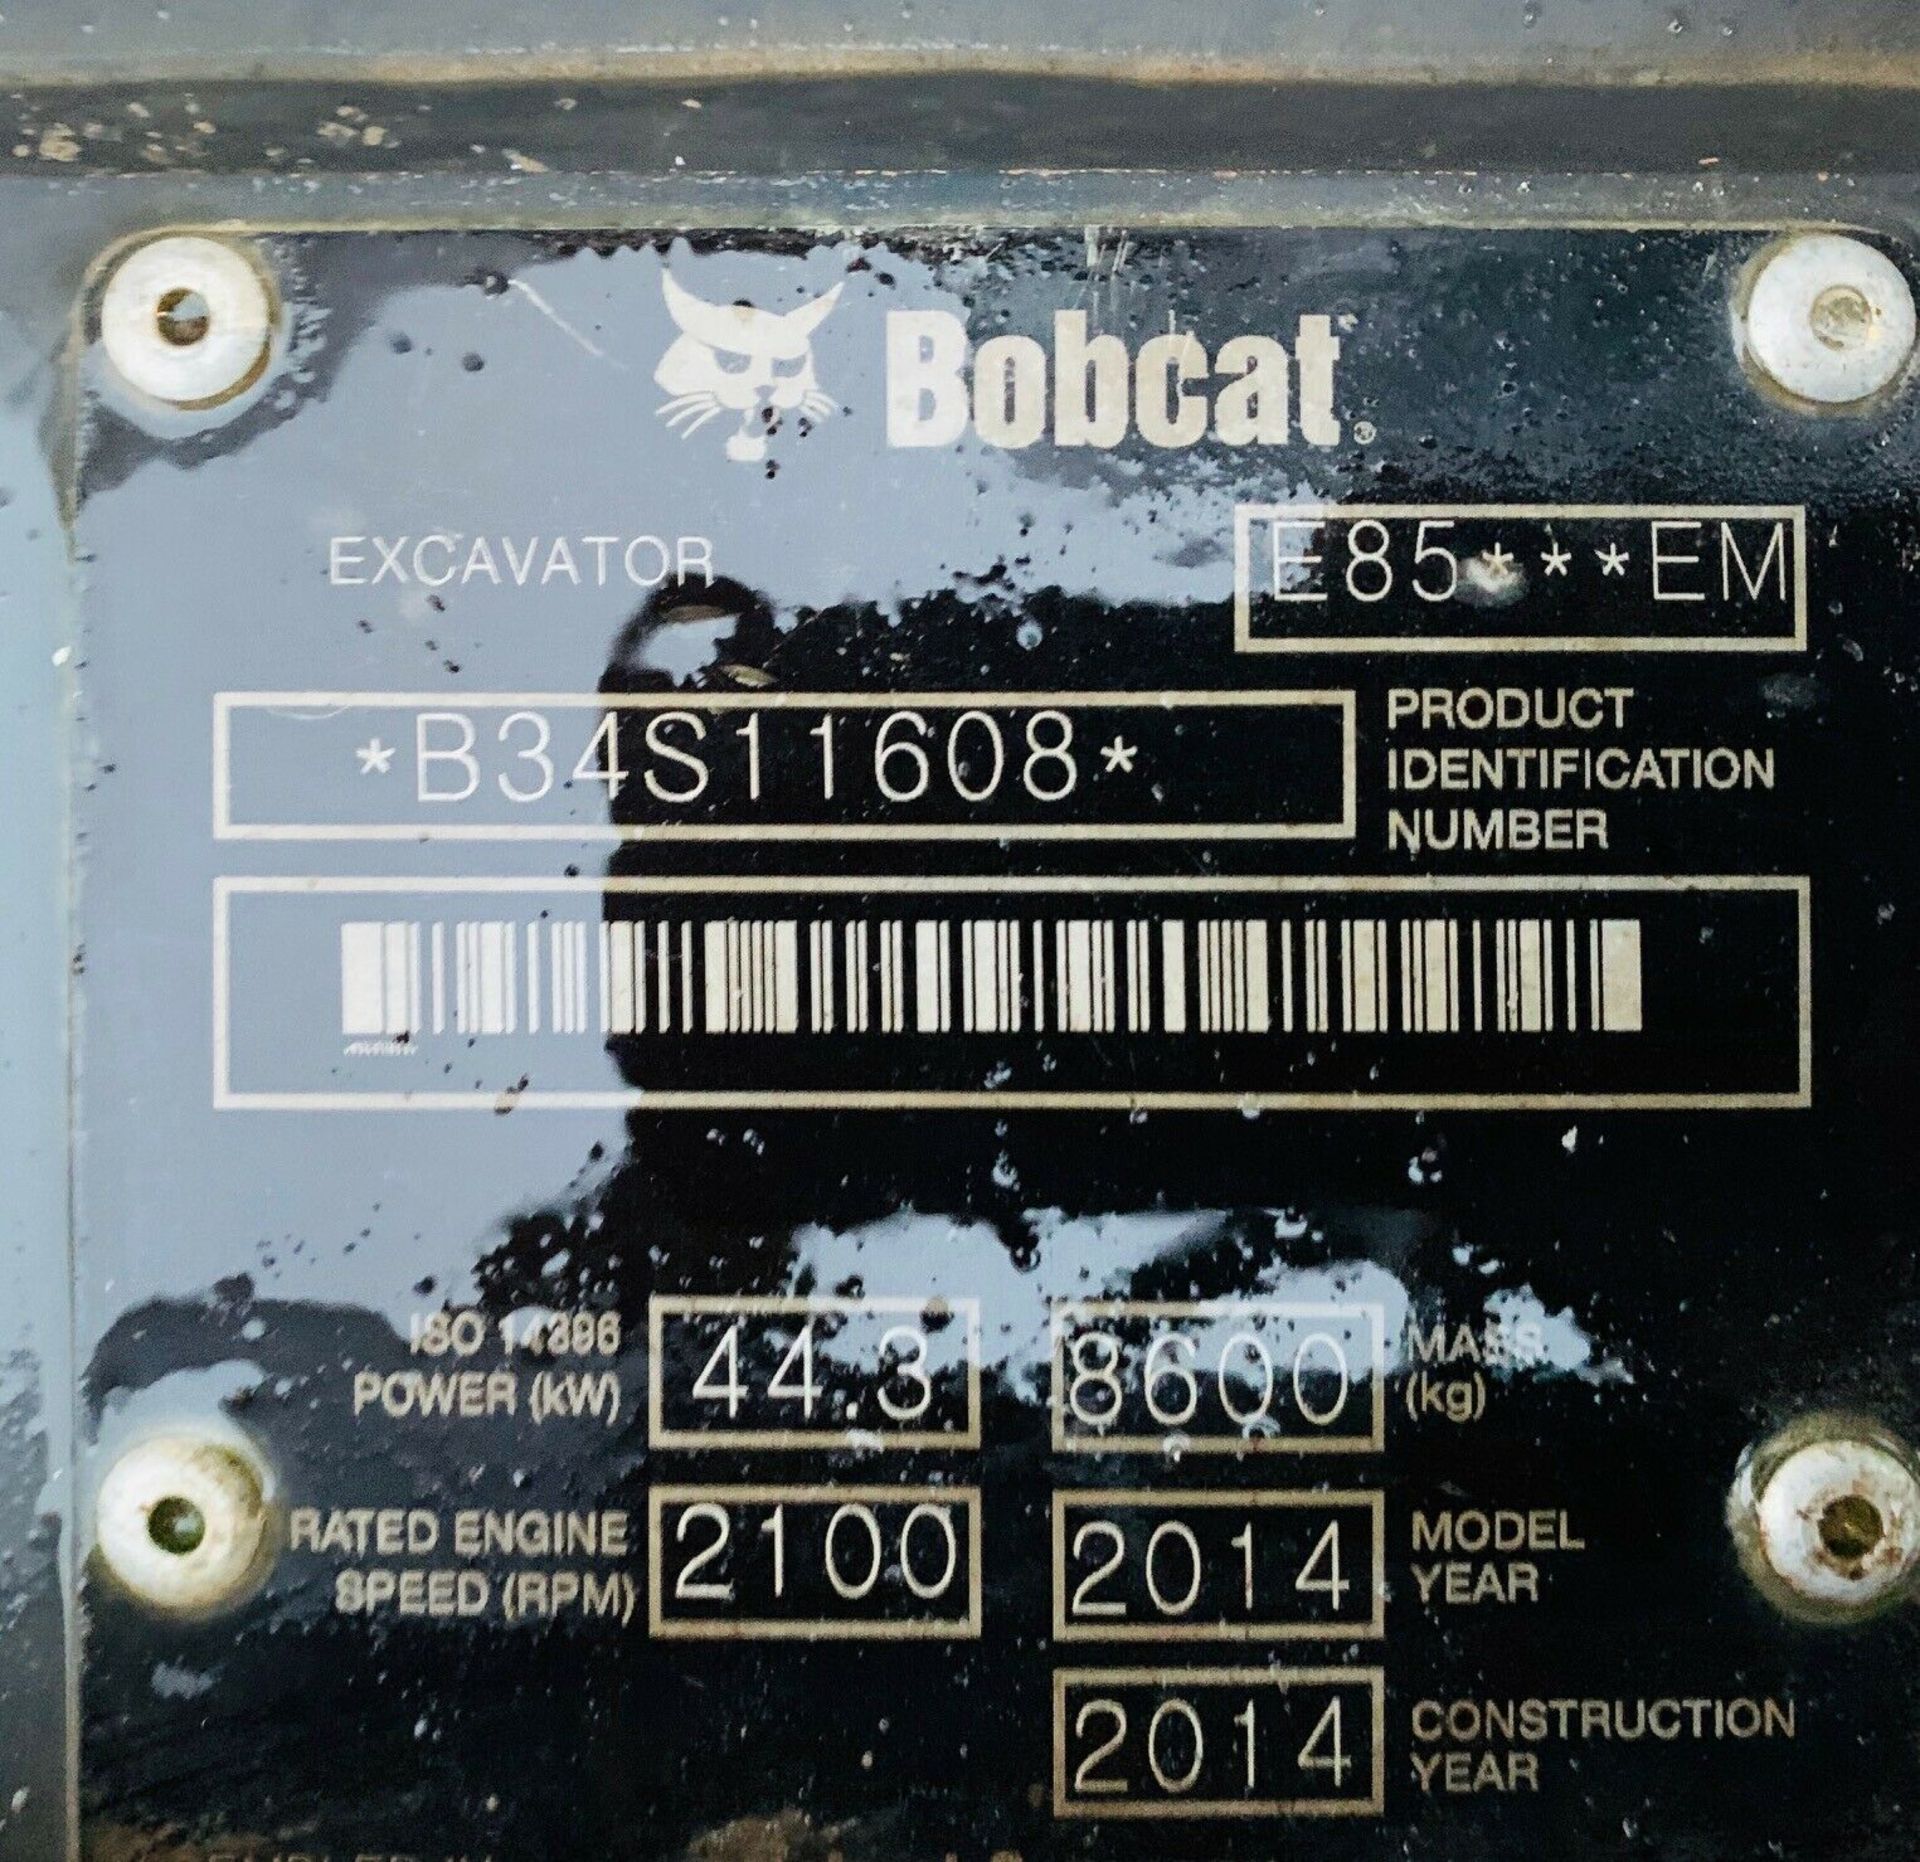 Bobcat E85 Excavator - Image 12 of 12